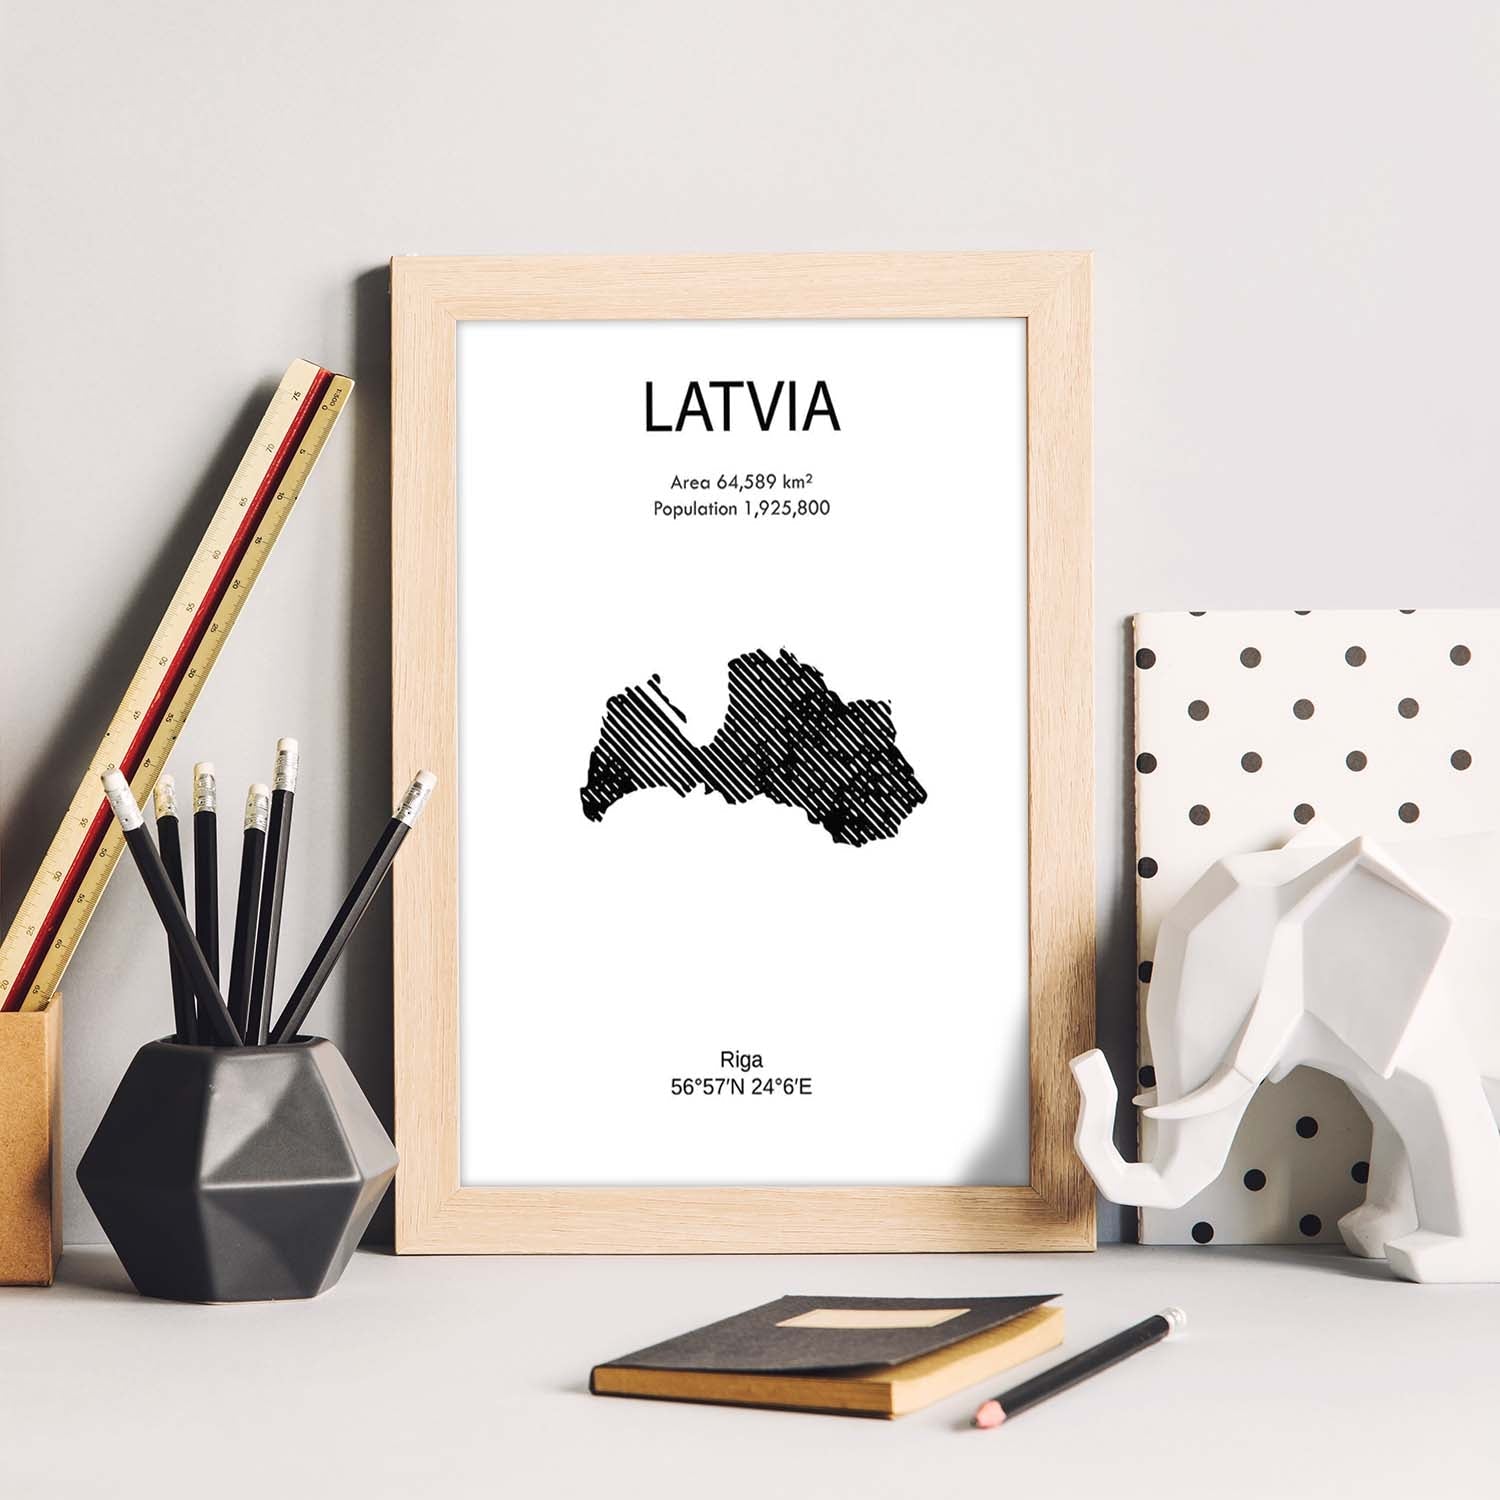 Poster de Latvia. Láminas de paises y continentes del mundo.-Artwork-Nacnic-Nacnic Estudio SL